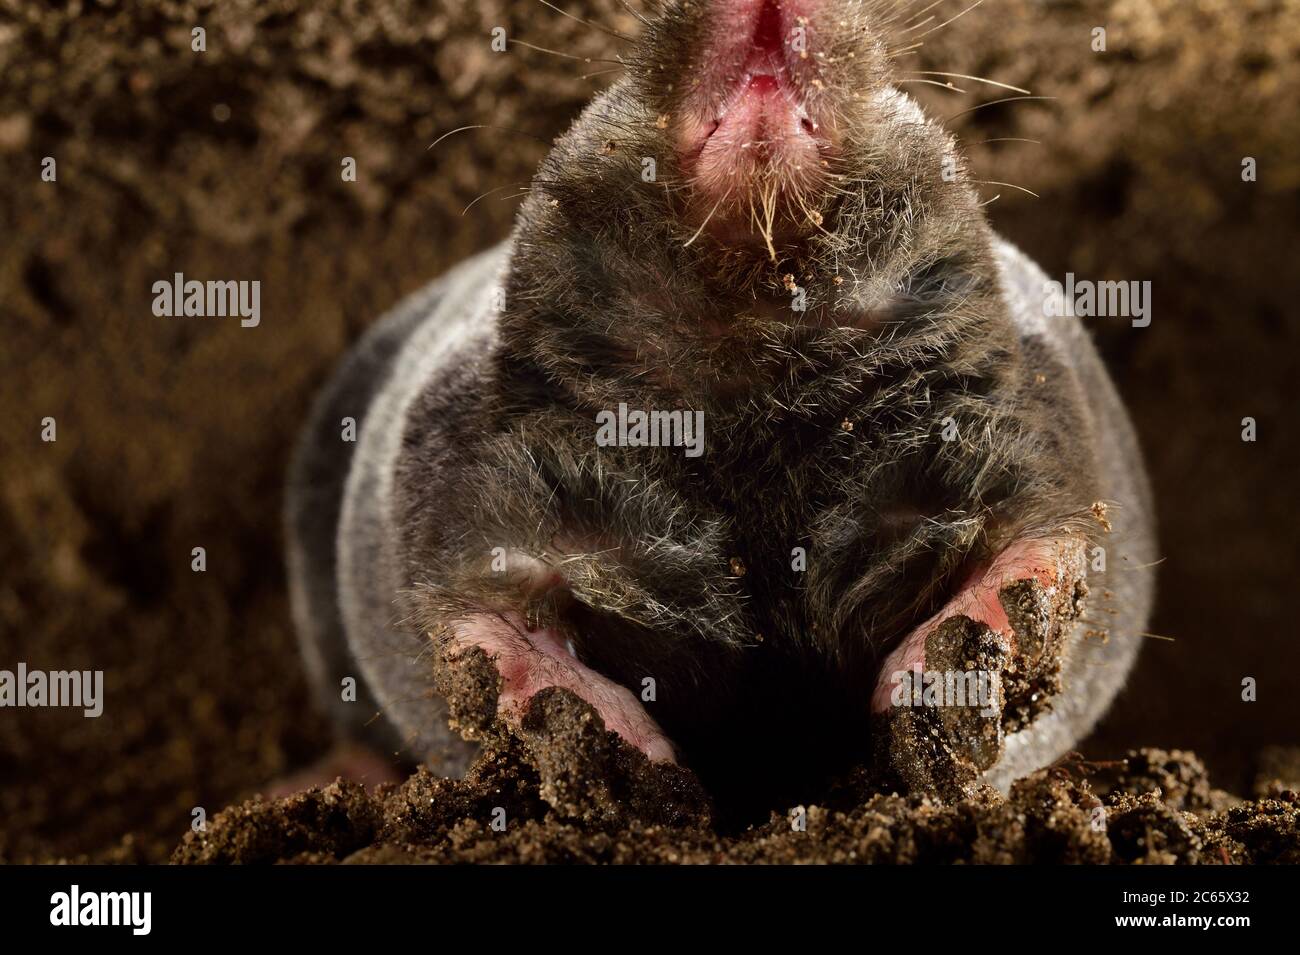 European Mole (Talpa europaea) in its subterranean burrow, Kiel, Germany Stock Photo